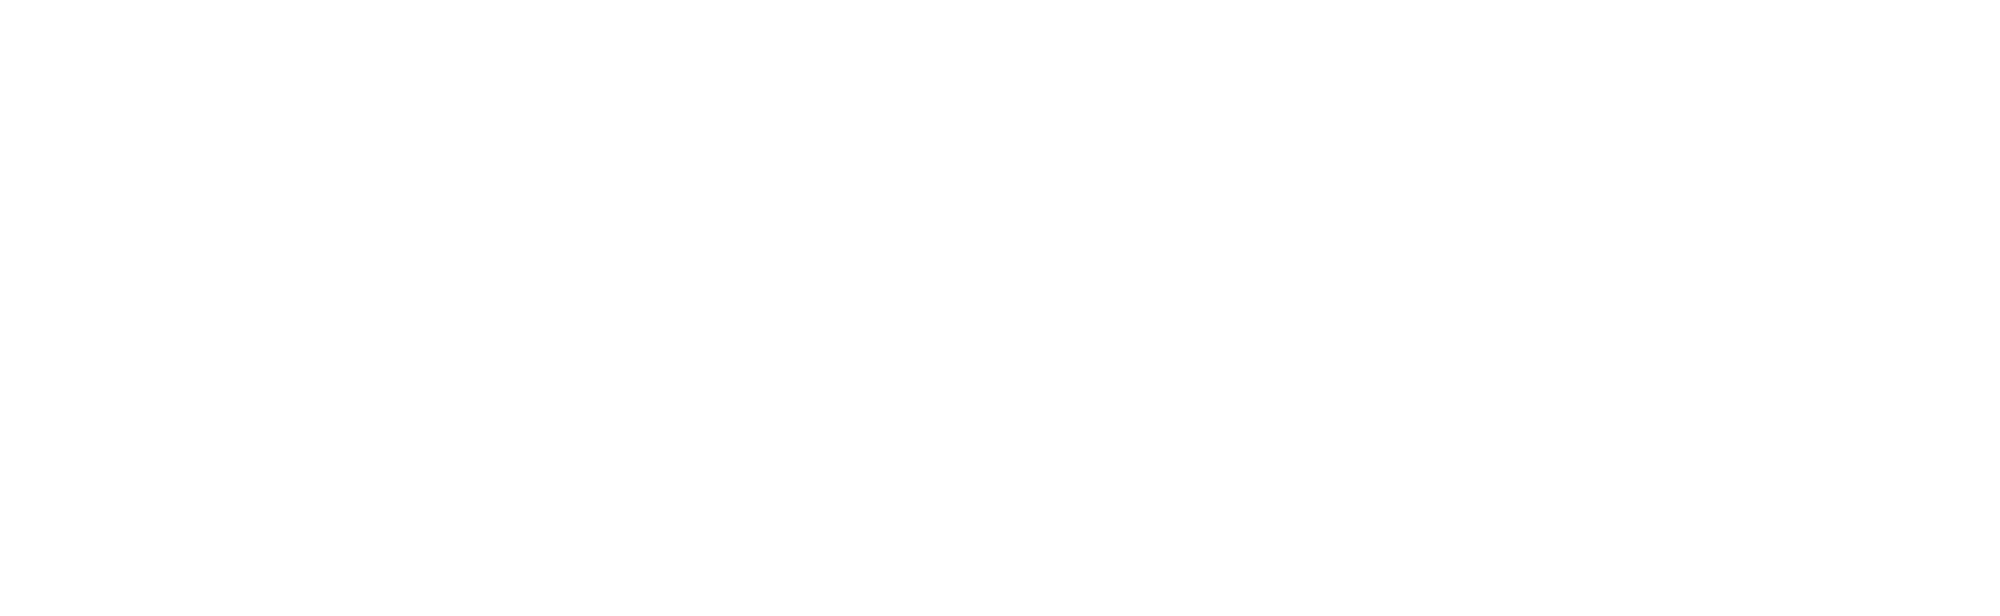 Nail Salons Florida